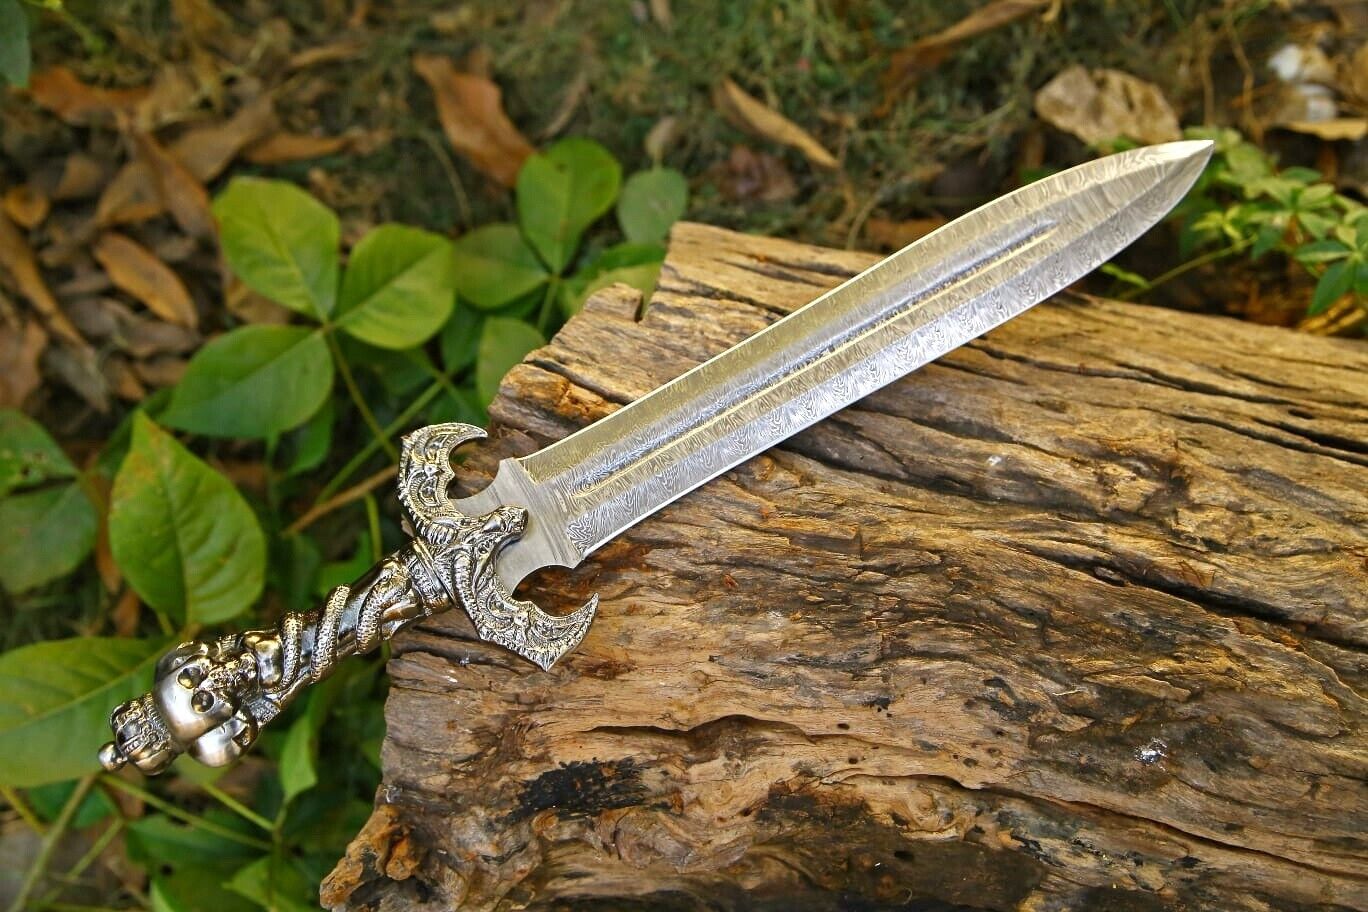 Handmade Turkish Sword, Kilij Sword,Ottoman Sword,Medieval sword, handmade sword